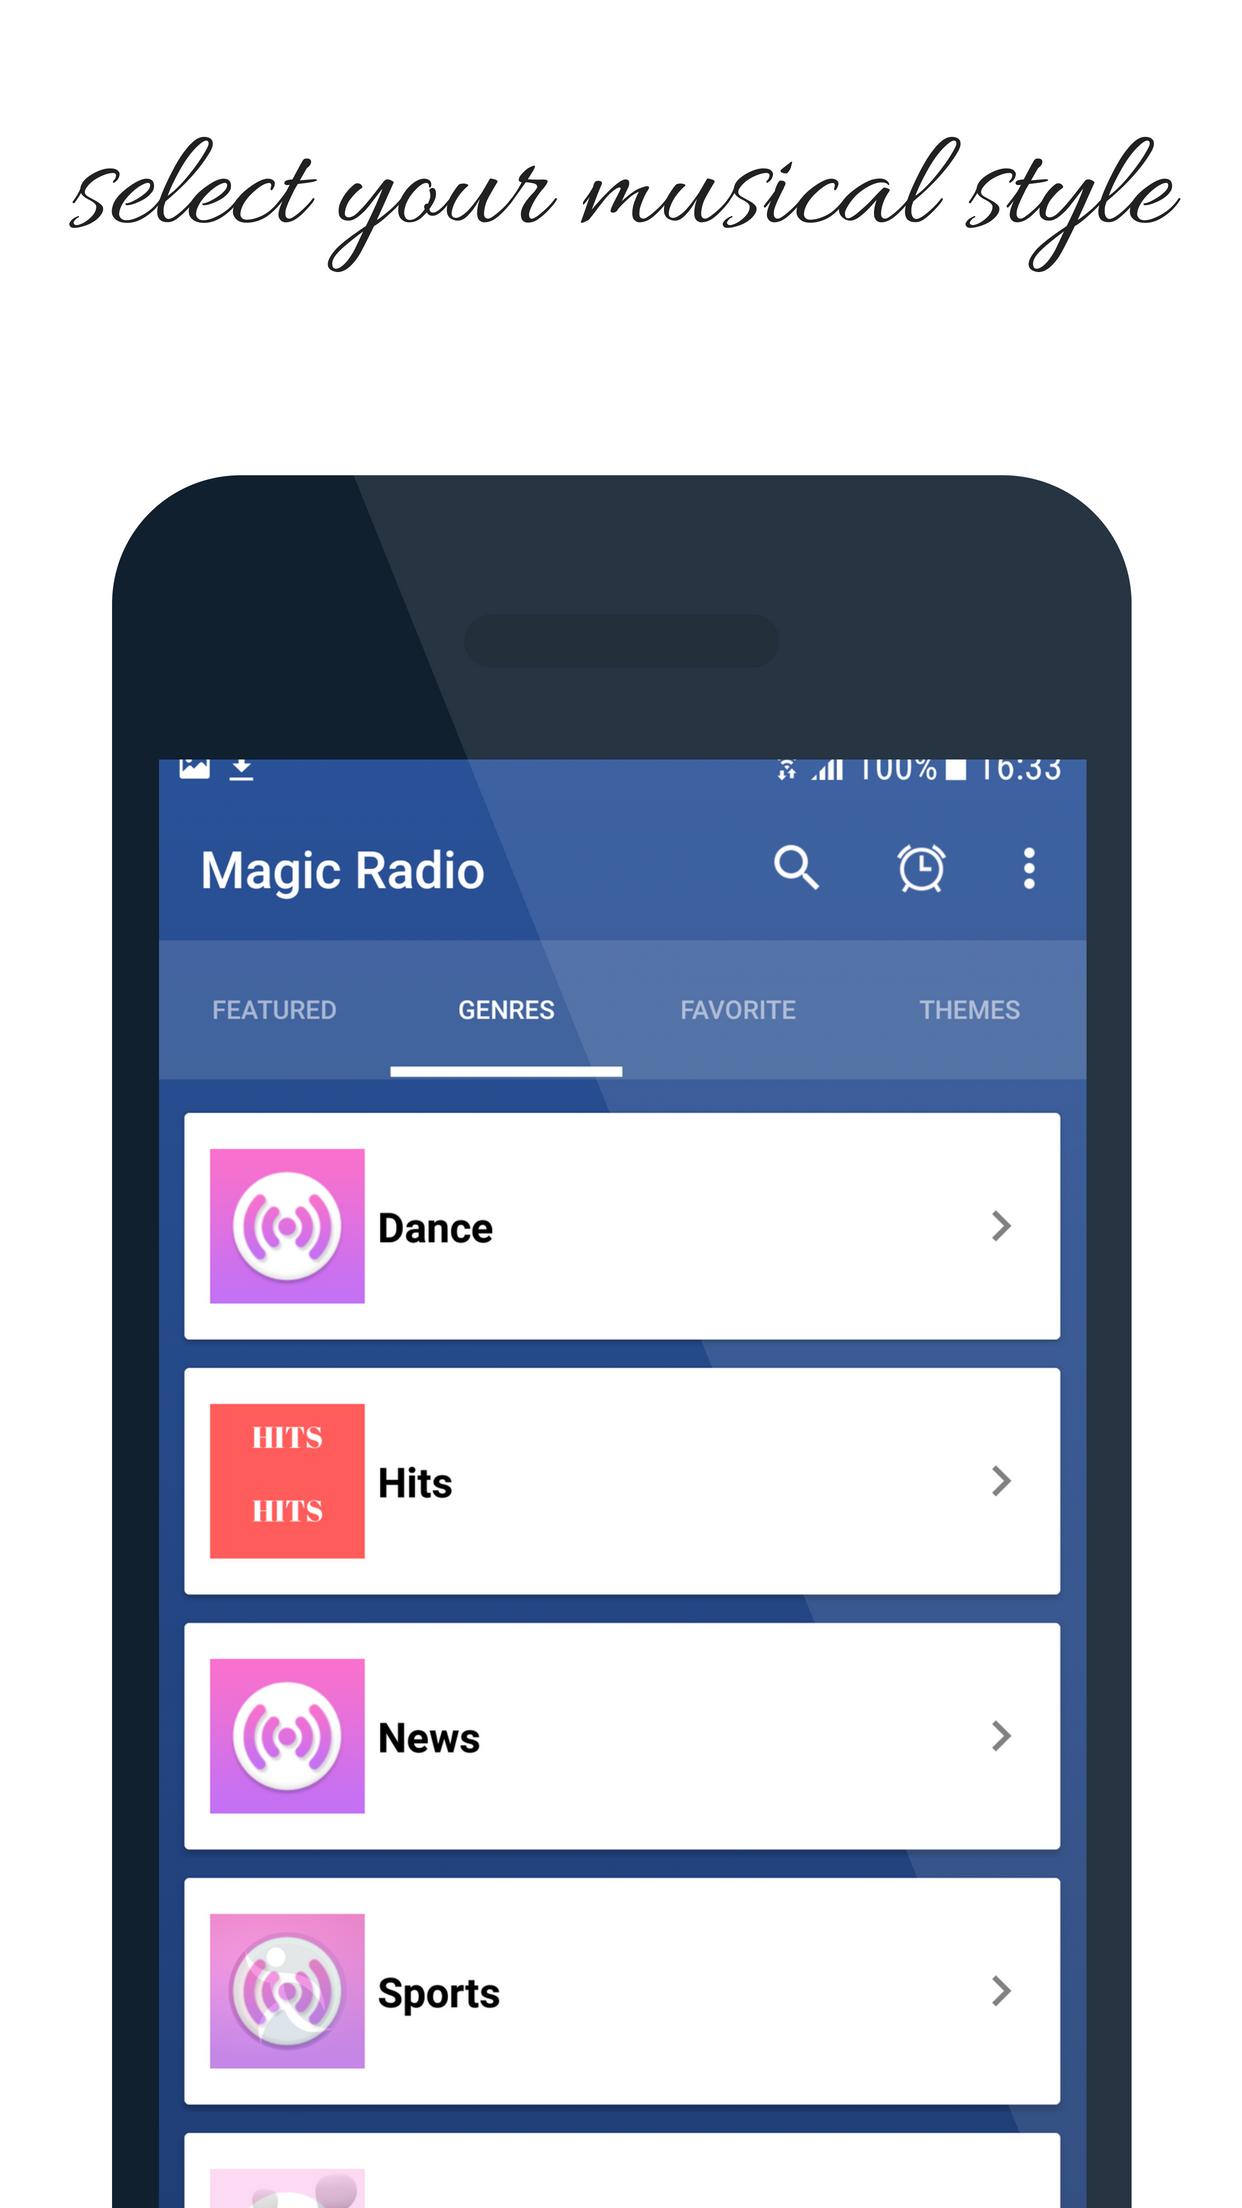 Magic Radio 105.4 FM App Station London UK for Android - APK Download